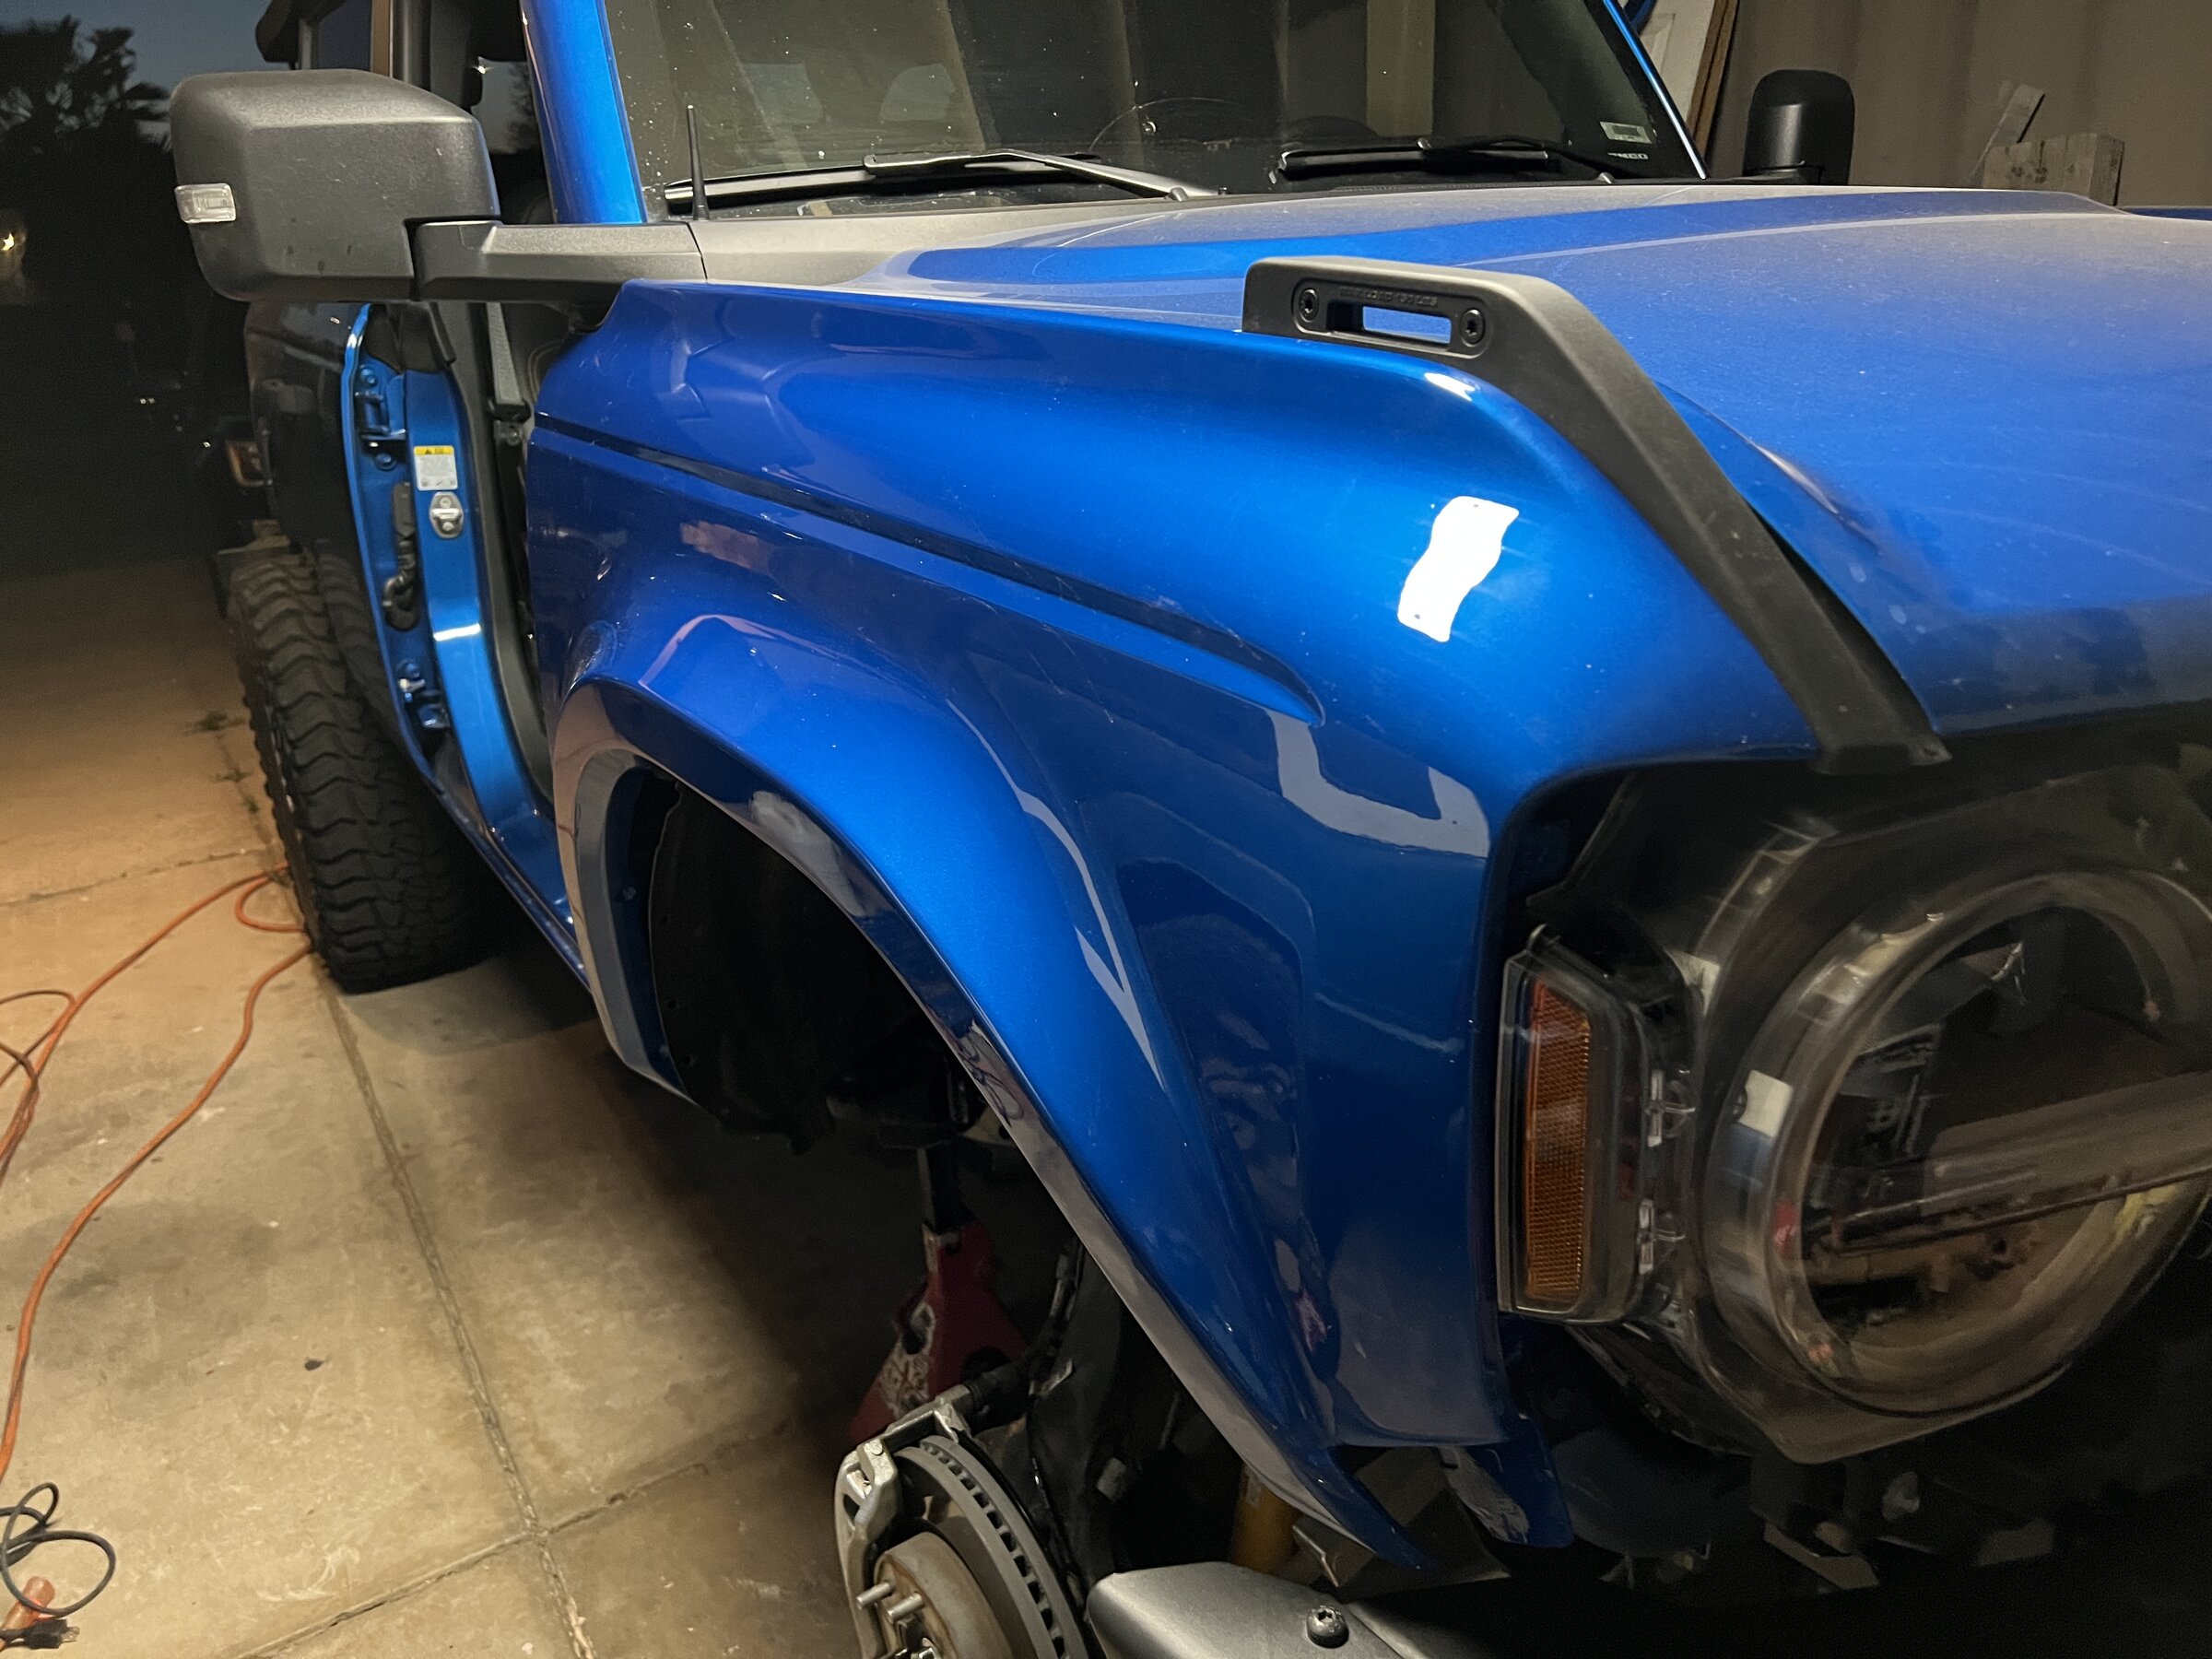 Ford Bronco Rockdawg84's Badsquach 21 Adventure and Build Thread "Wild Blue" 715CB625-5465-49A3-A68B-FC11B0C7E346